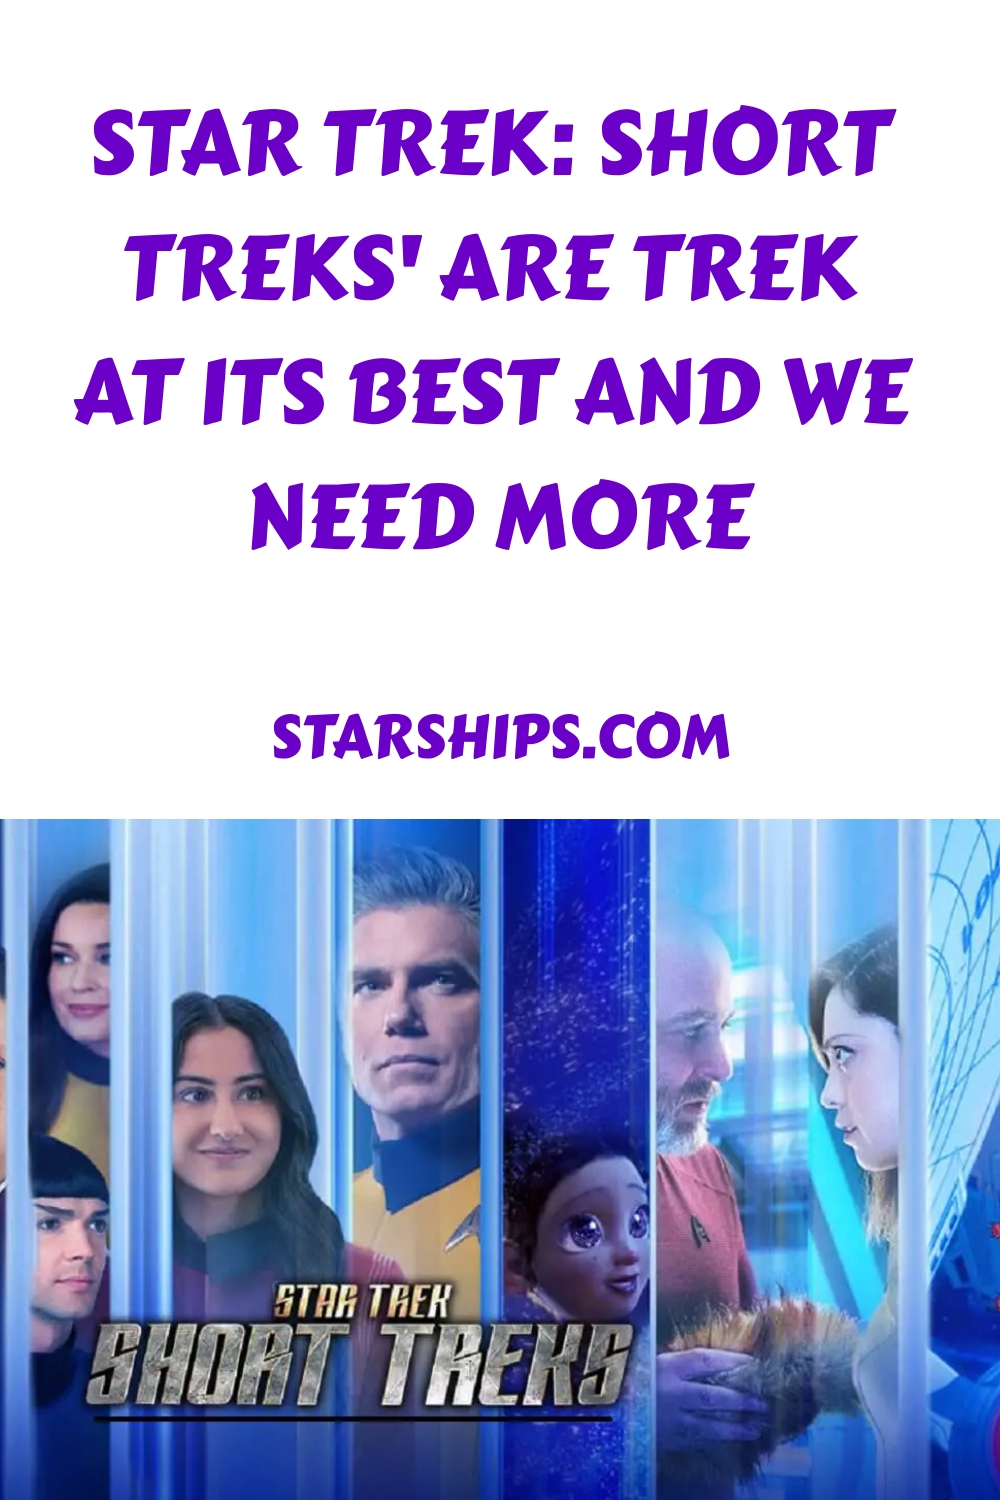 Star Trek Short Treks Are Trek at Its Best and We Need More generated pin 56656